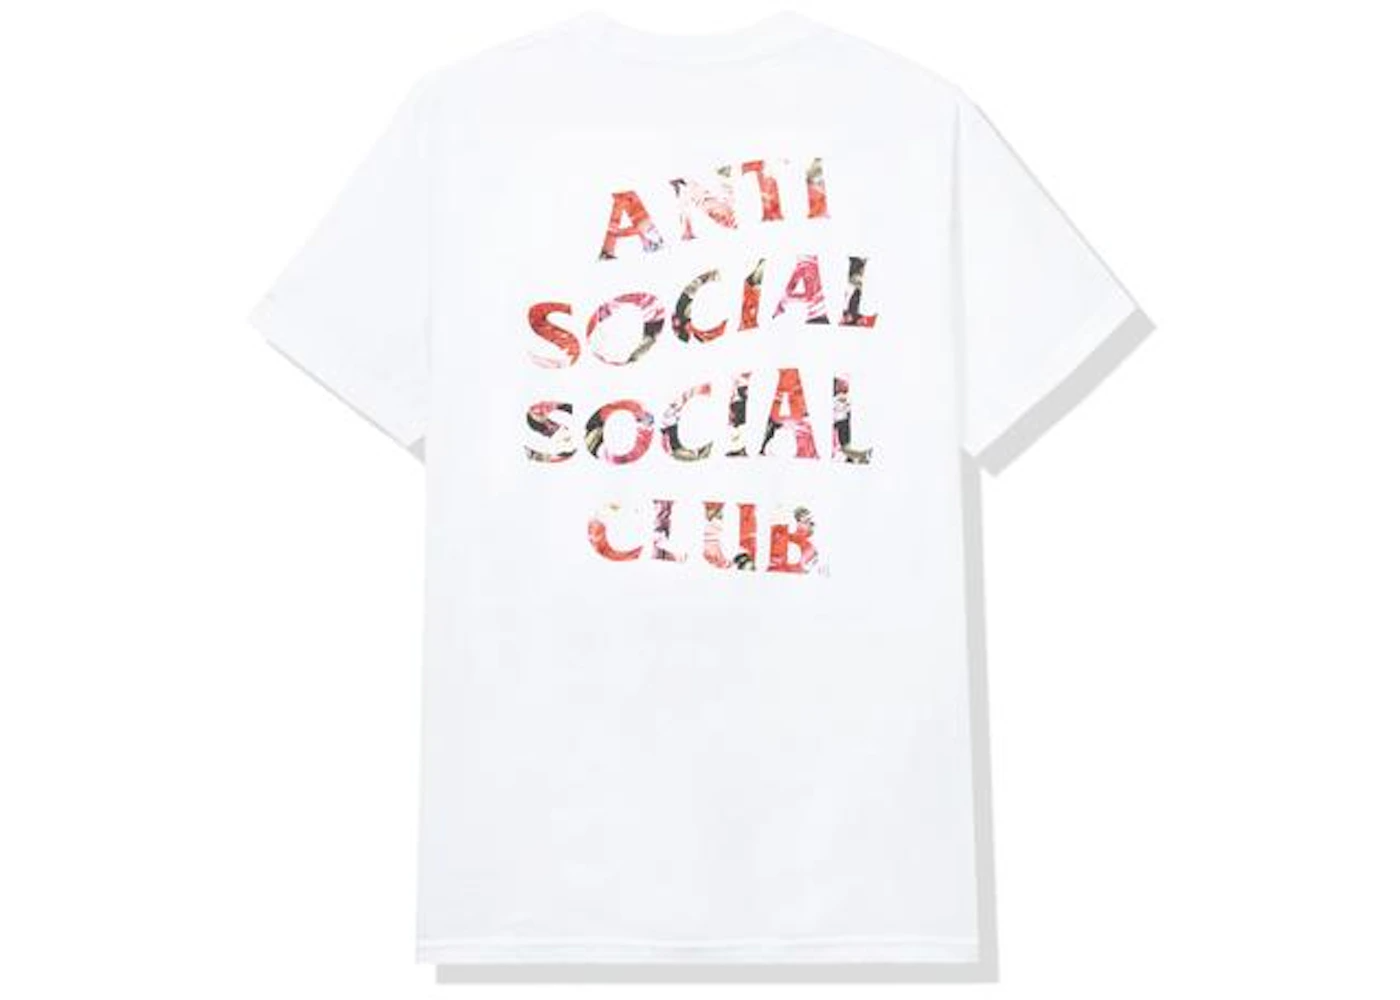 Anti Social Social Club Bed Tee White